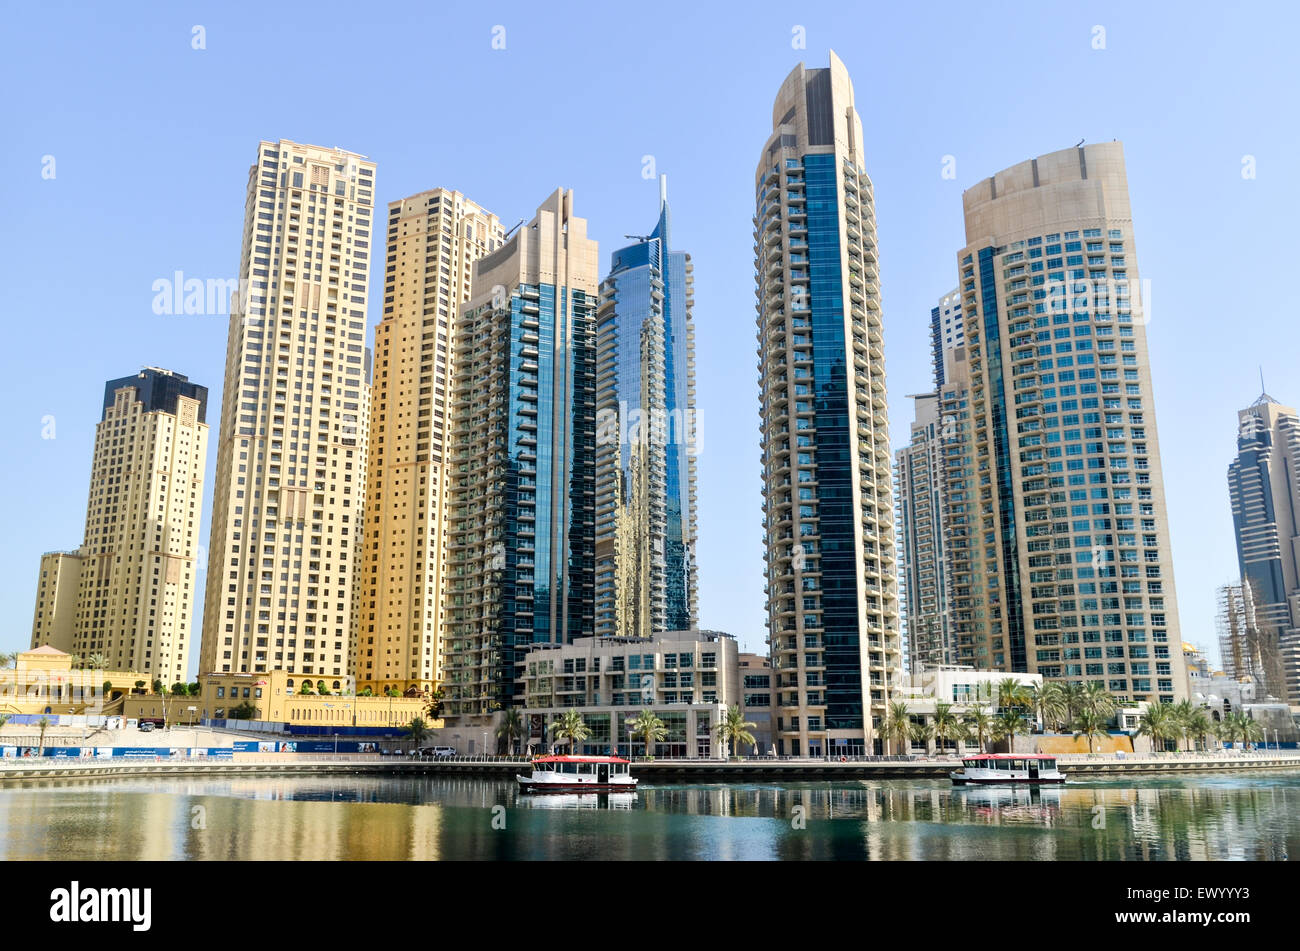 Futuristic and modern high rise buildings, towers and hotels of the Dubai Marina, United Arab Emirates Stock Photo